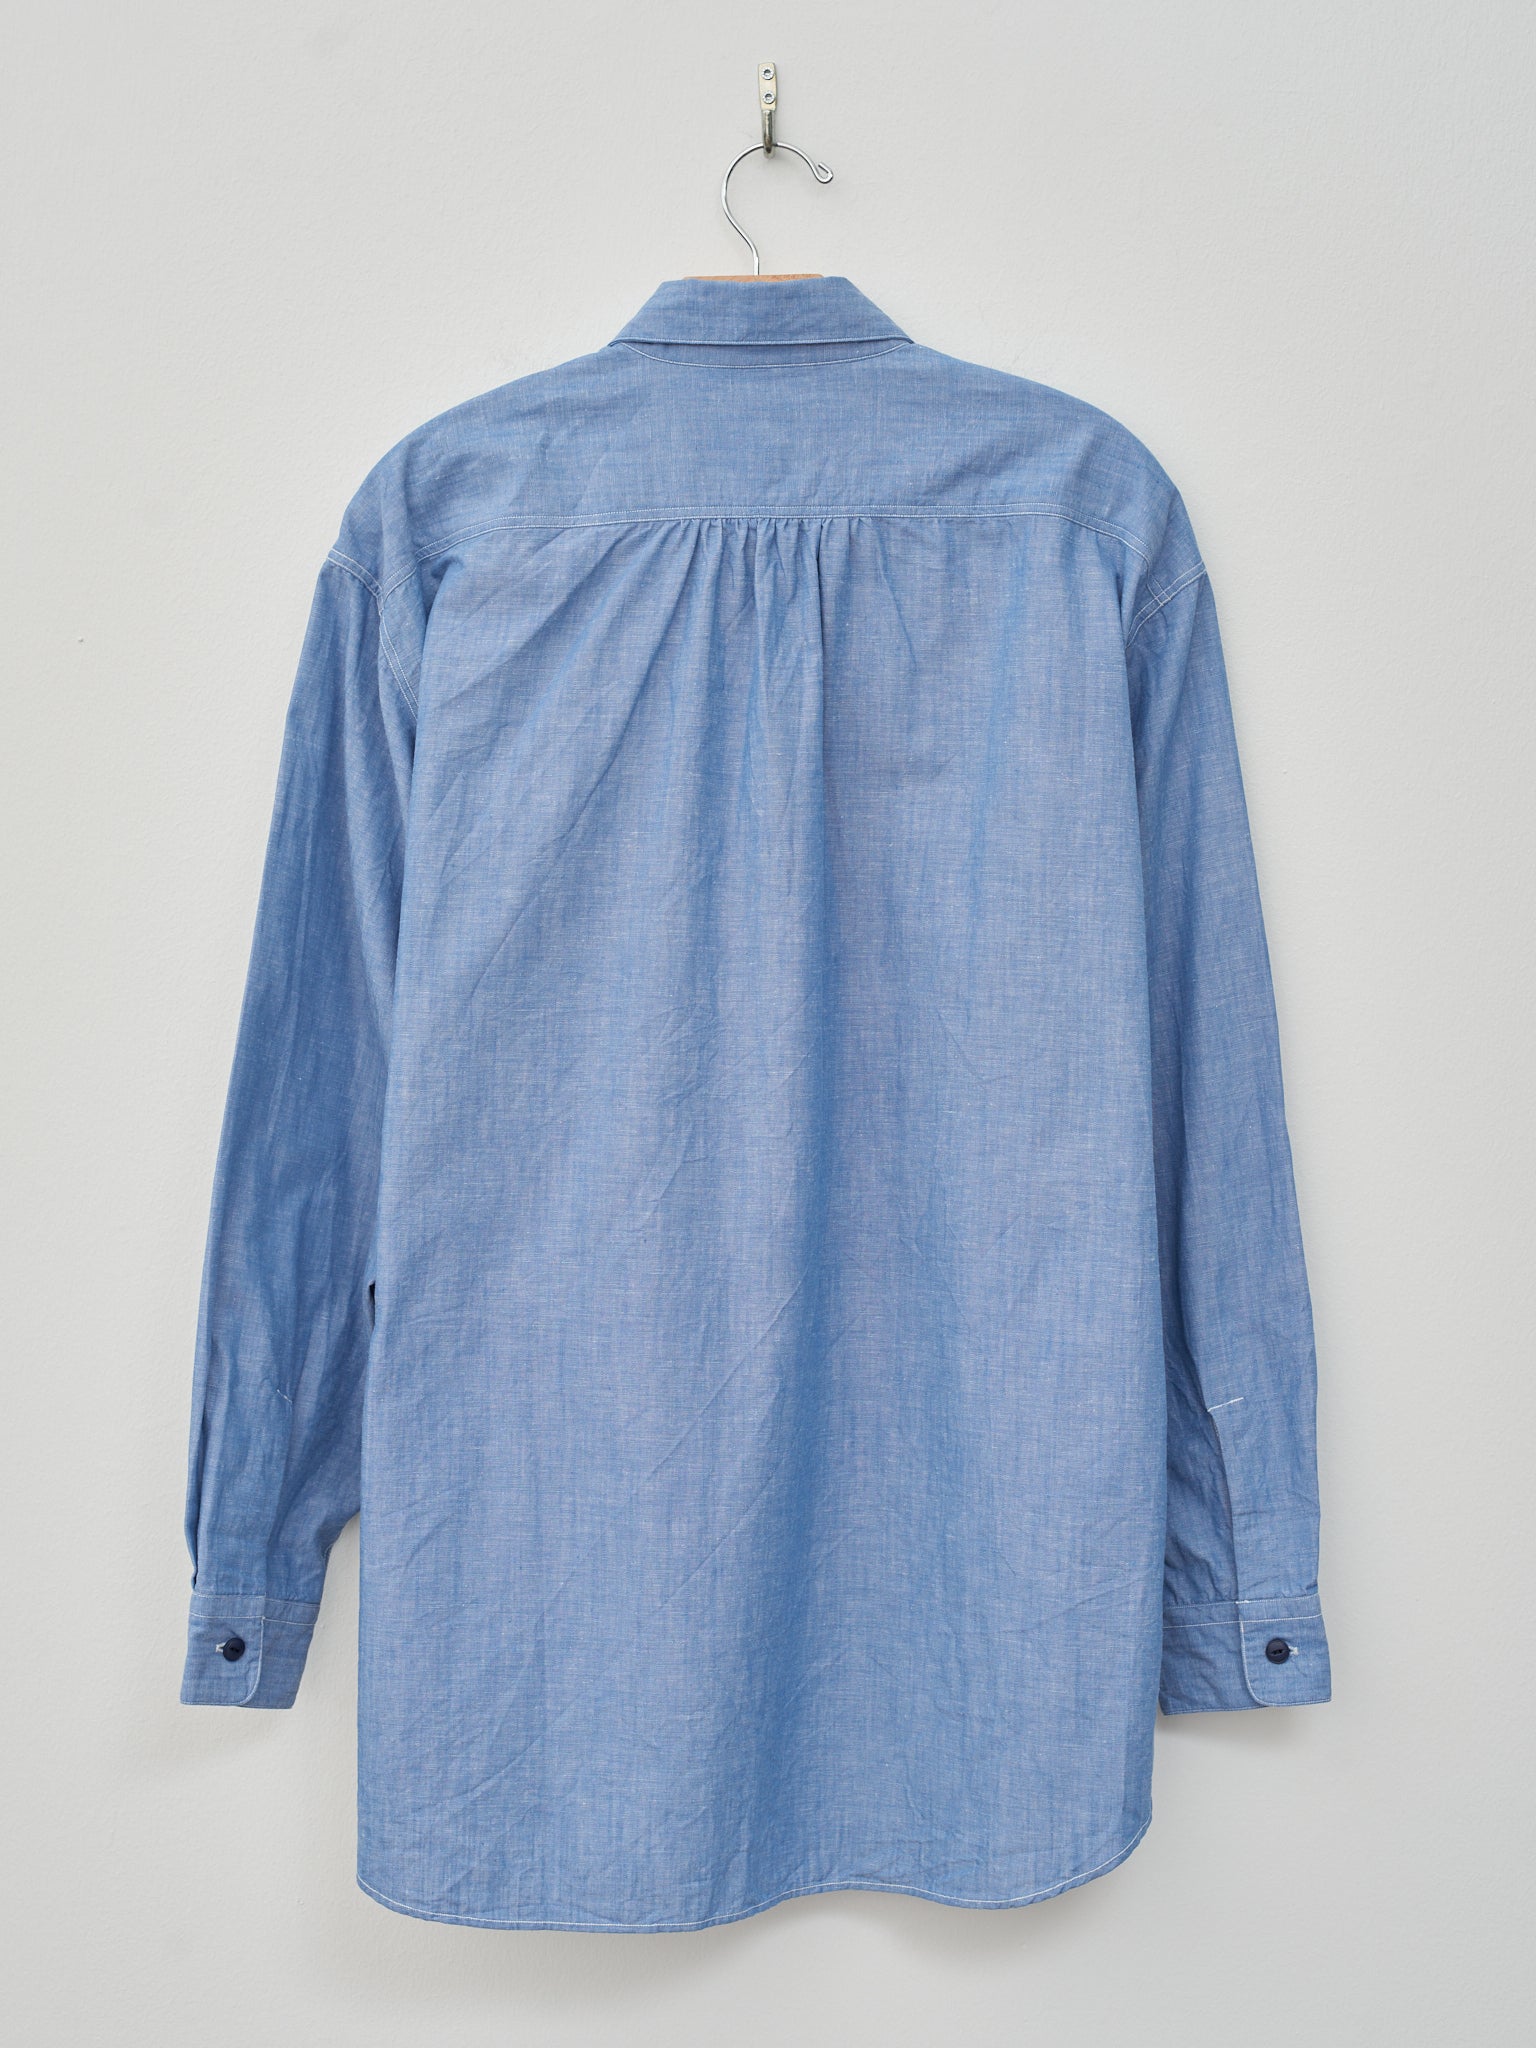 Namu Shop - Fujito B/S Work Shirt - Blue Chambray